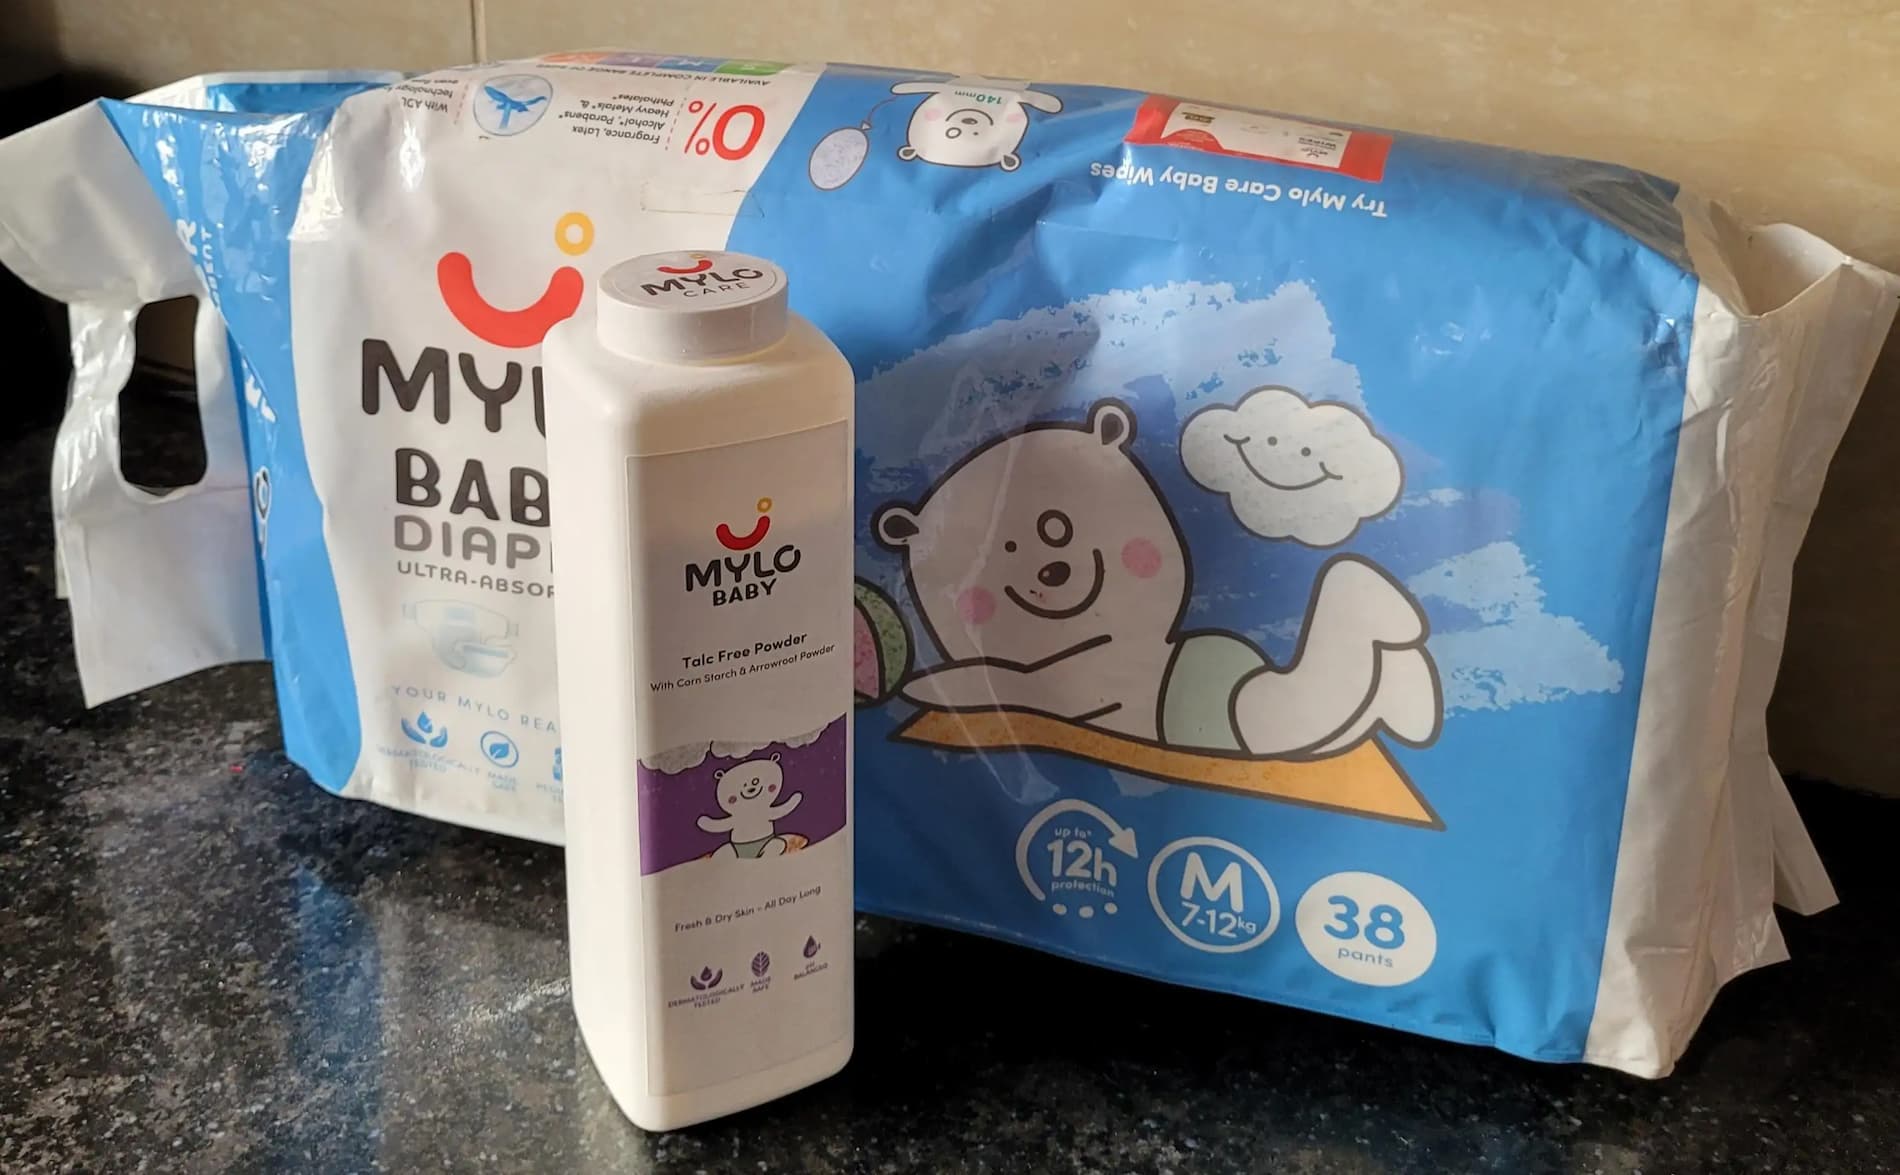 Baby Diaper Pants Medium (M) Size 7-12 kgs (Jumbo Pack) + Baby Soap (Pack of 3)